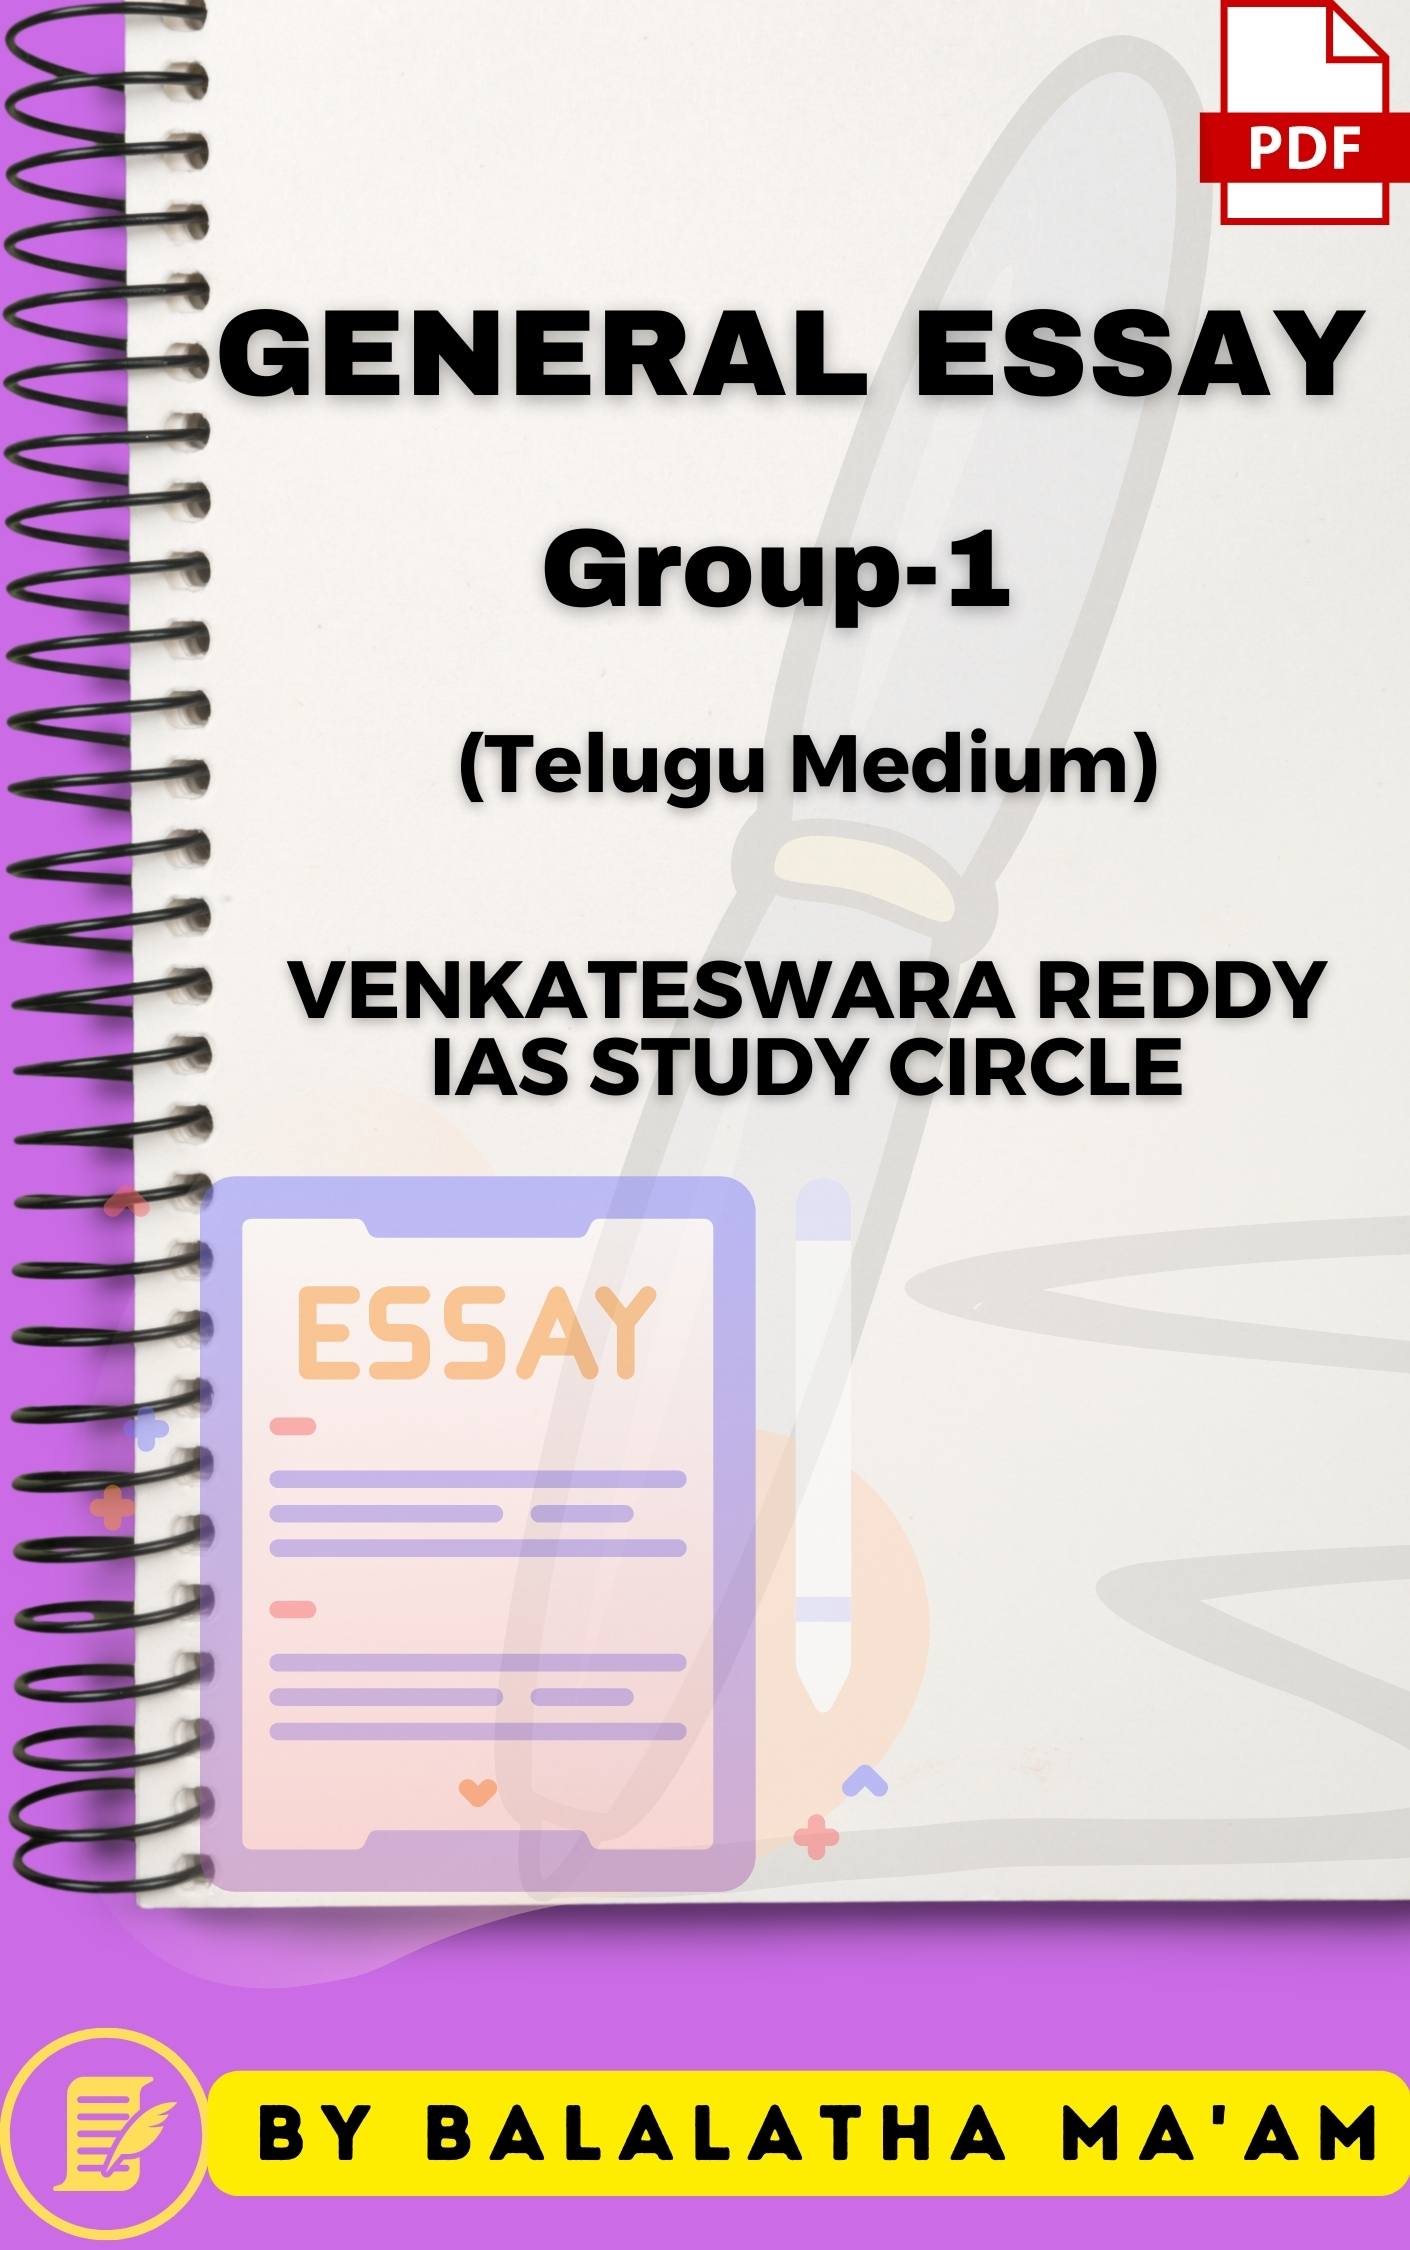 General Essay For Group-1 By Balalatha Madam (Hand Written Class Notes - Telugu Medium)